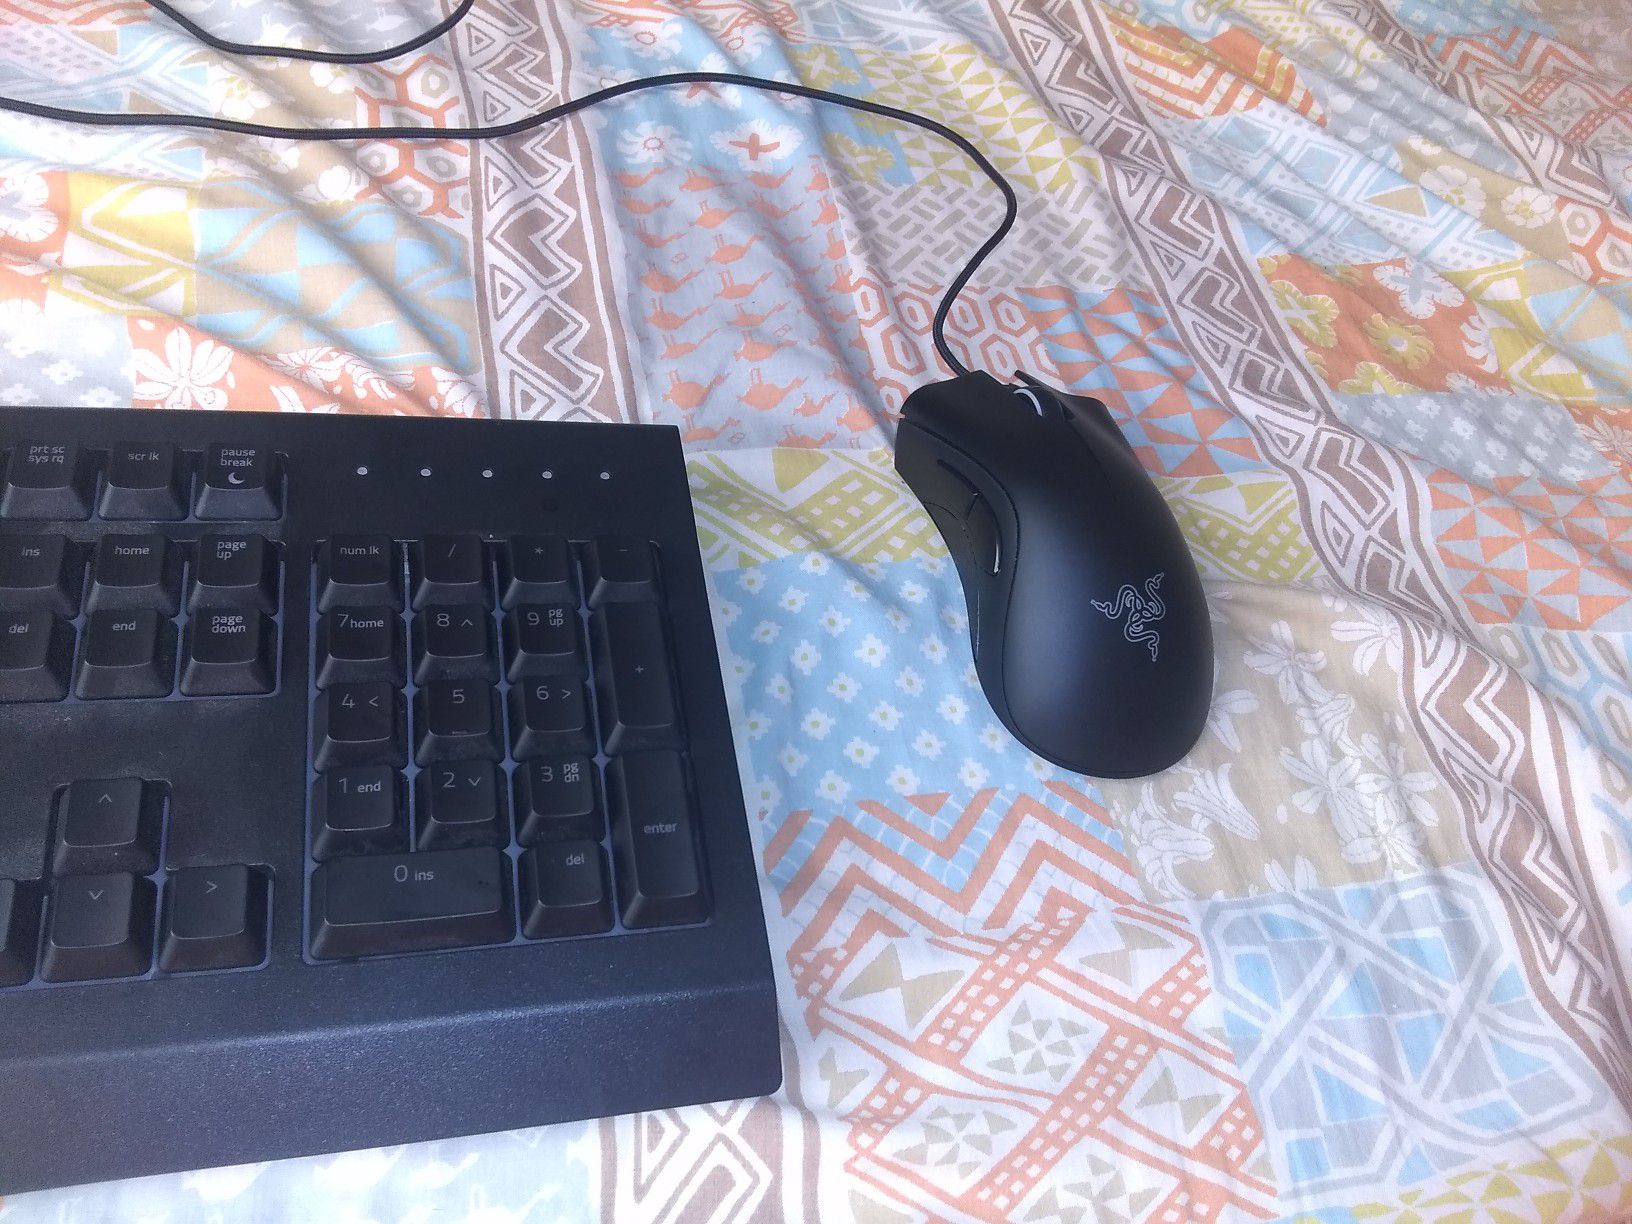 Razer rainbow keyboard and mouse